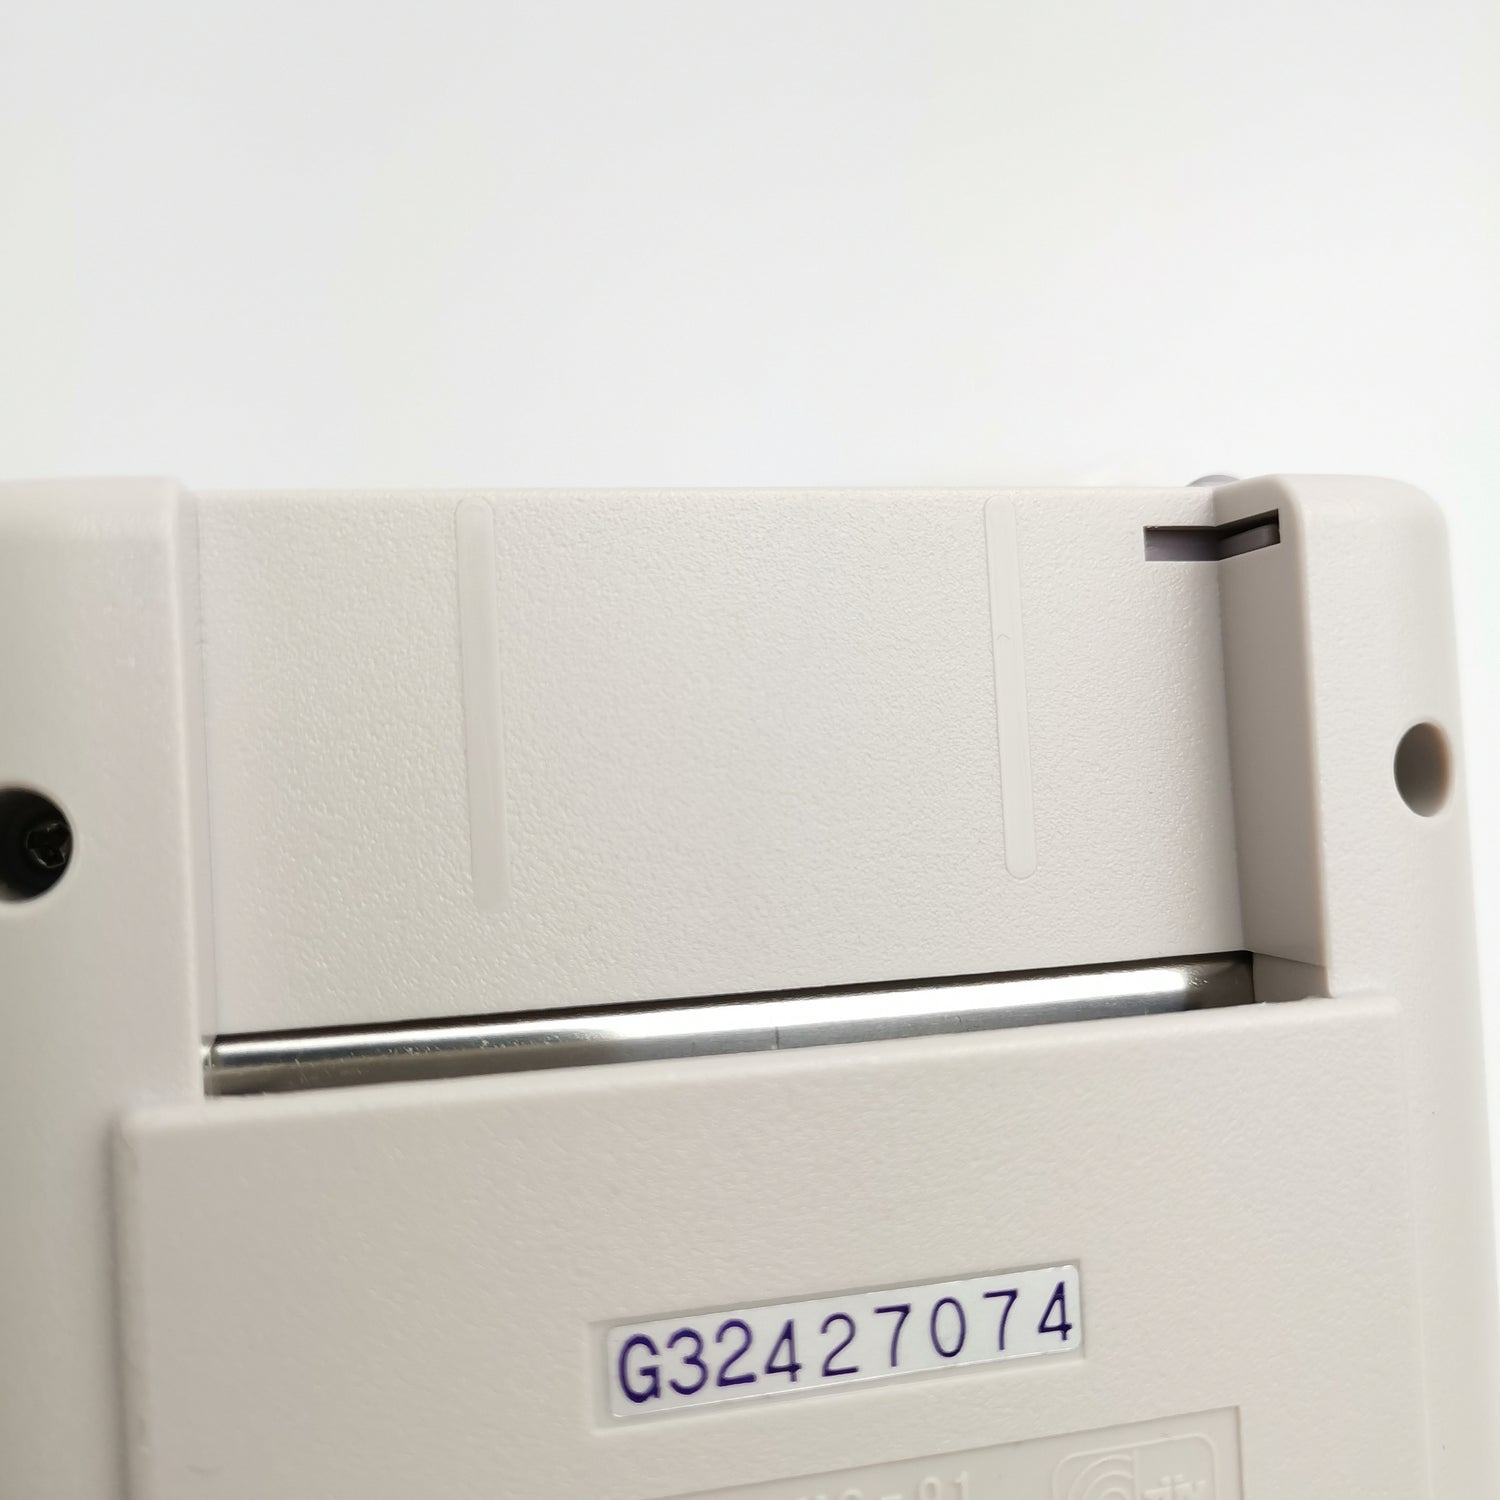 Nintendo Gameboy Classic Console: Basic Set NOE | NEW NEW old Stock - Game Boy